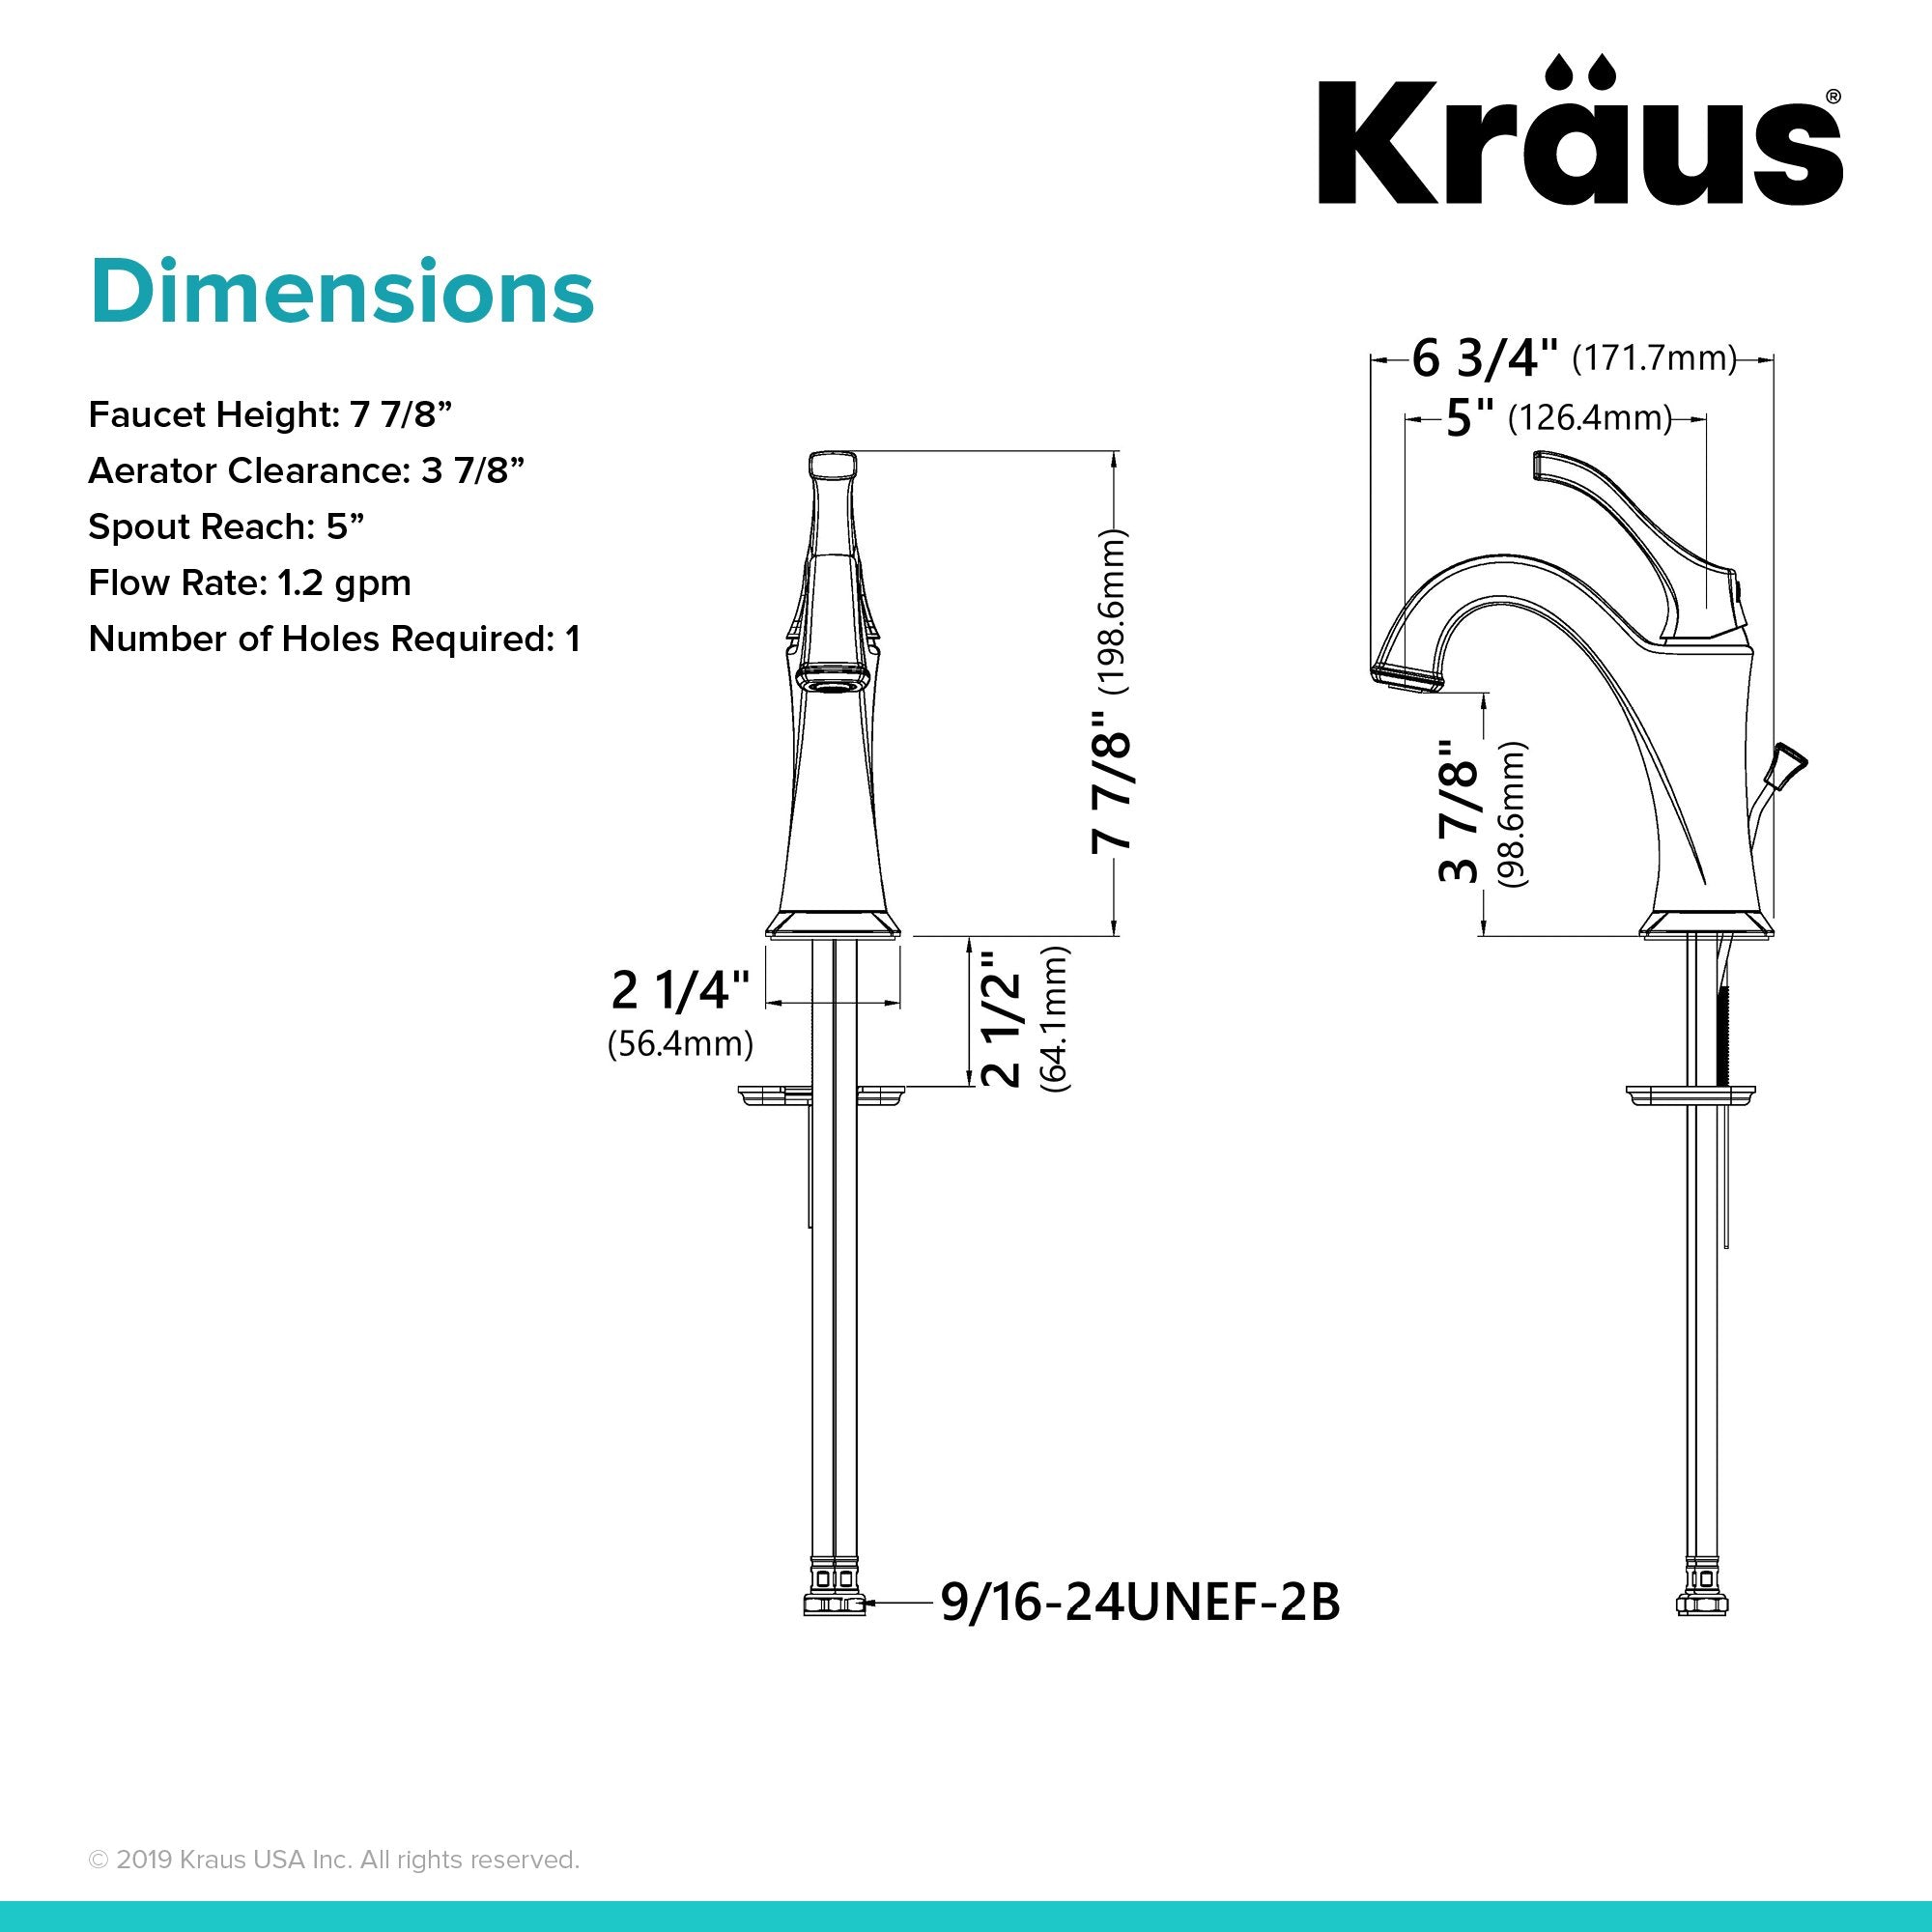 KRAUS Arlo Single Handle Bathroom Faucet with Lift Rod Drain and Deck Plate in Matte Black KBF-1201MB-2PK | DirectSinks